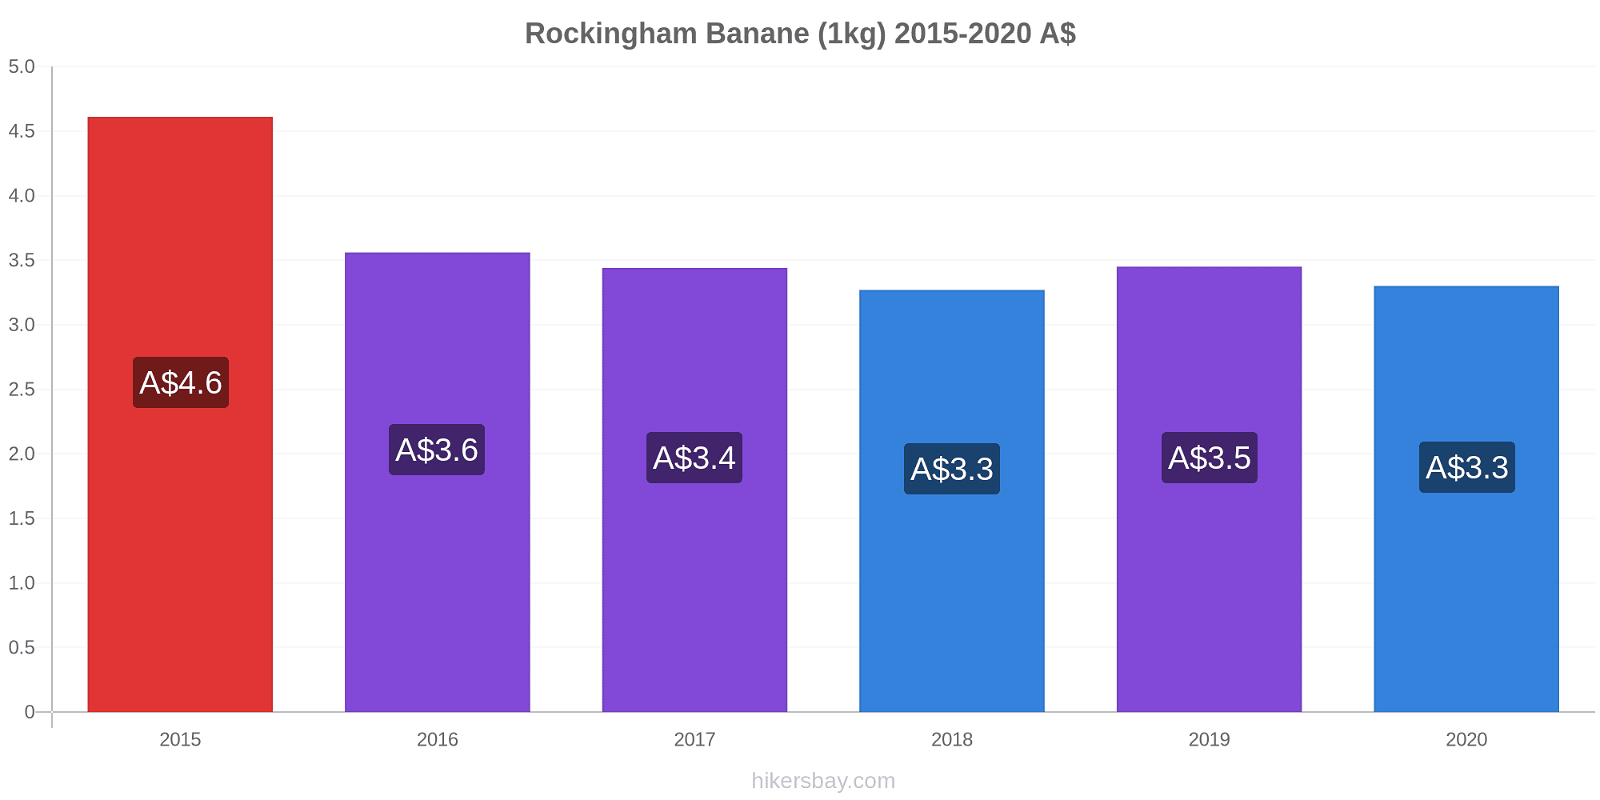 Rockingham variazioni di prezzo Banana (1kg) hikersbay.com